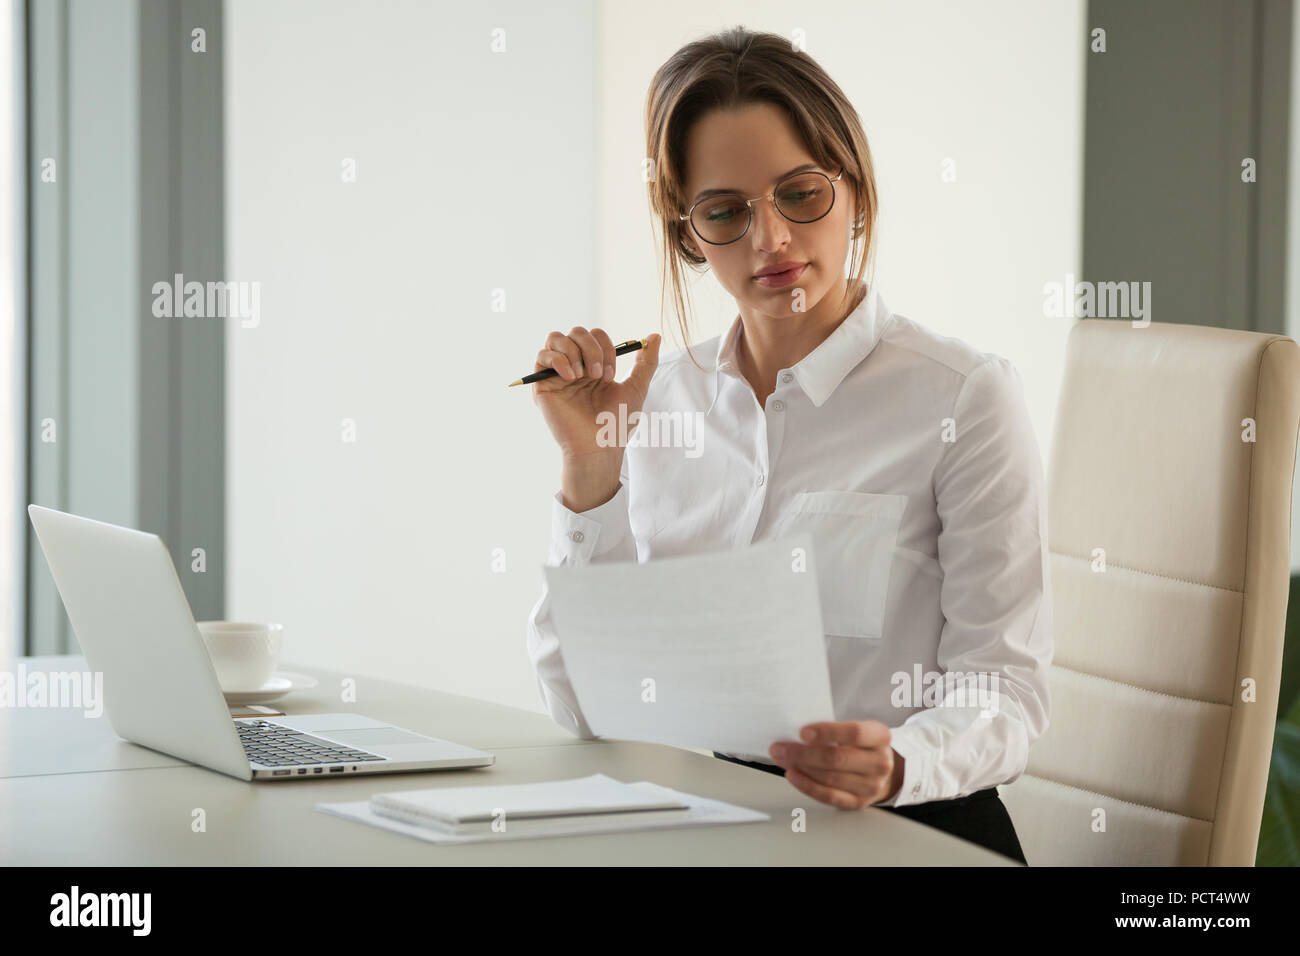 Serious female boss reading document analyzing statistics Stock Photo